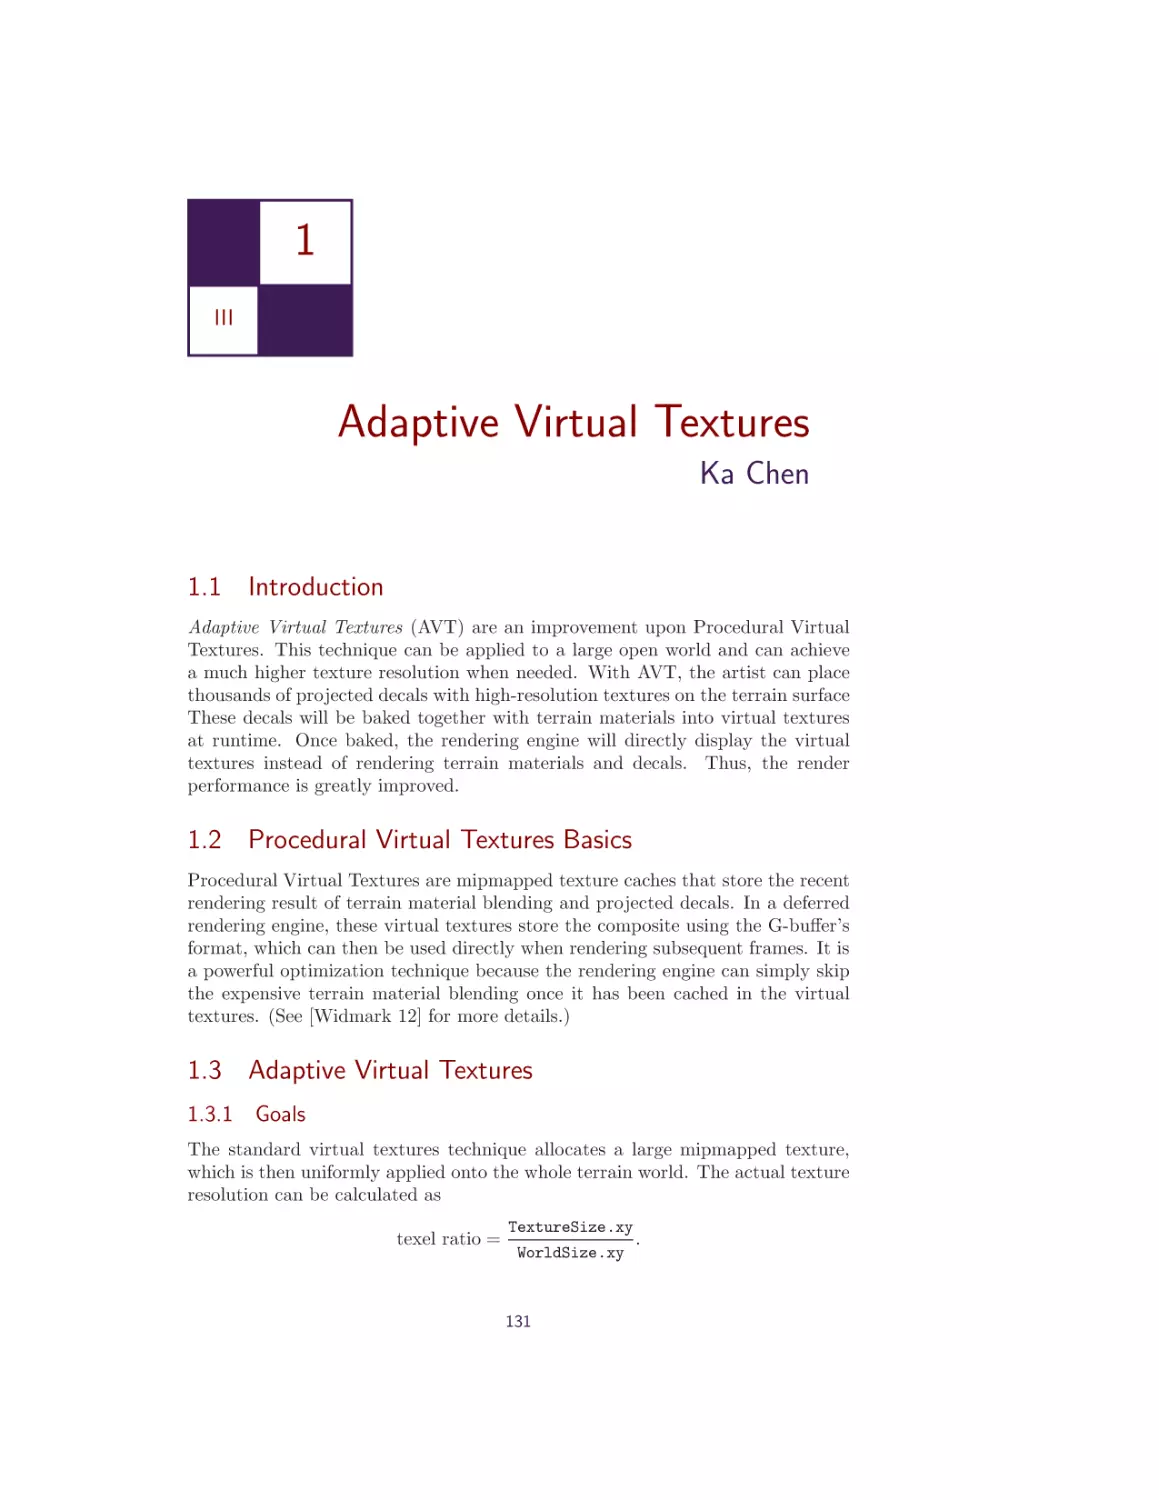 1. Adaptive Virtual Textures